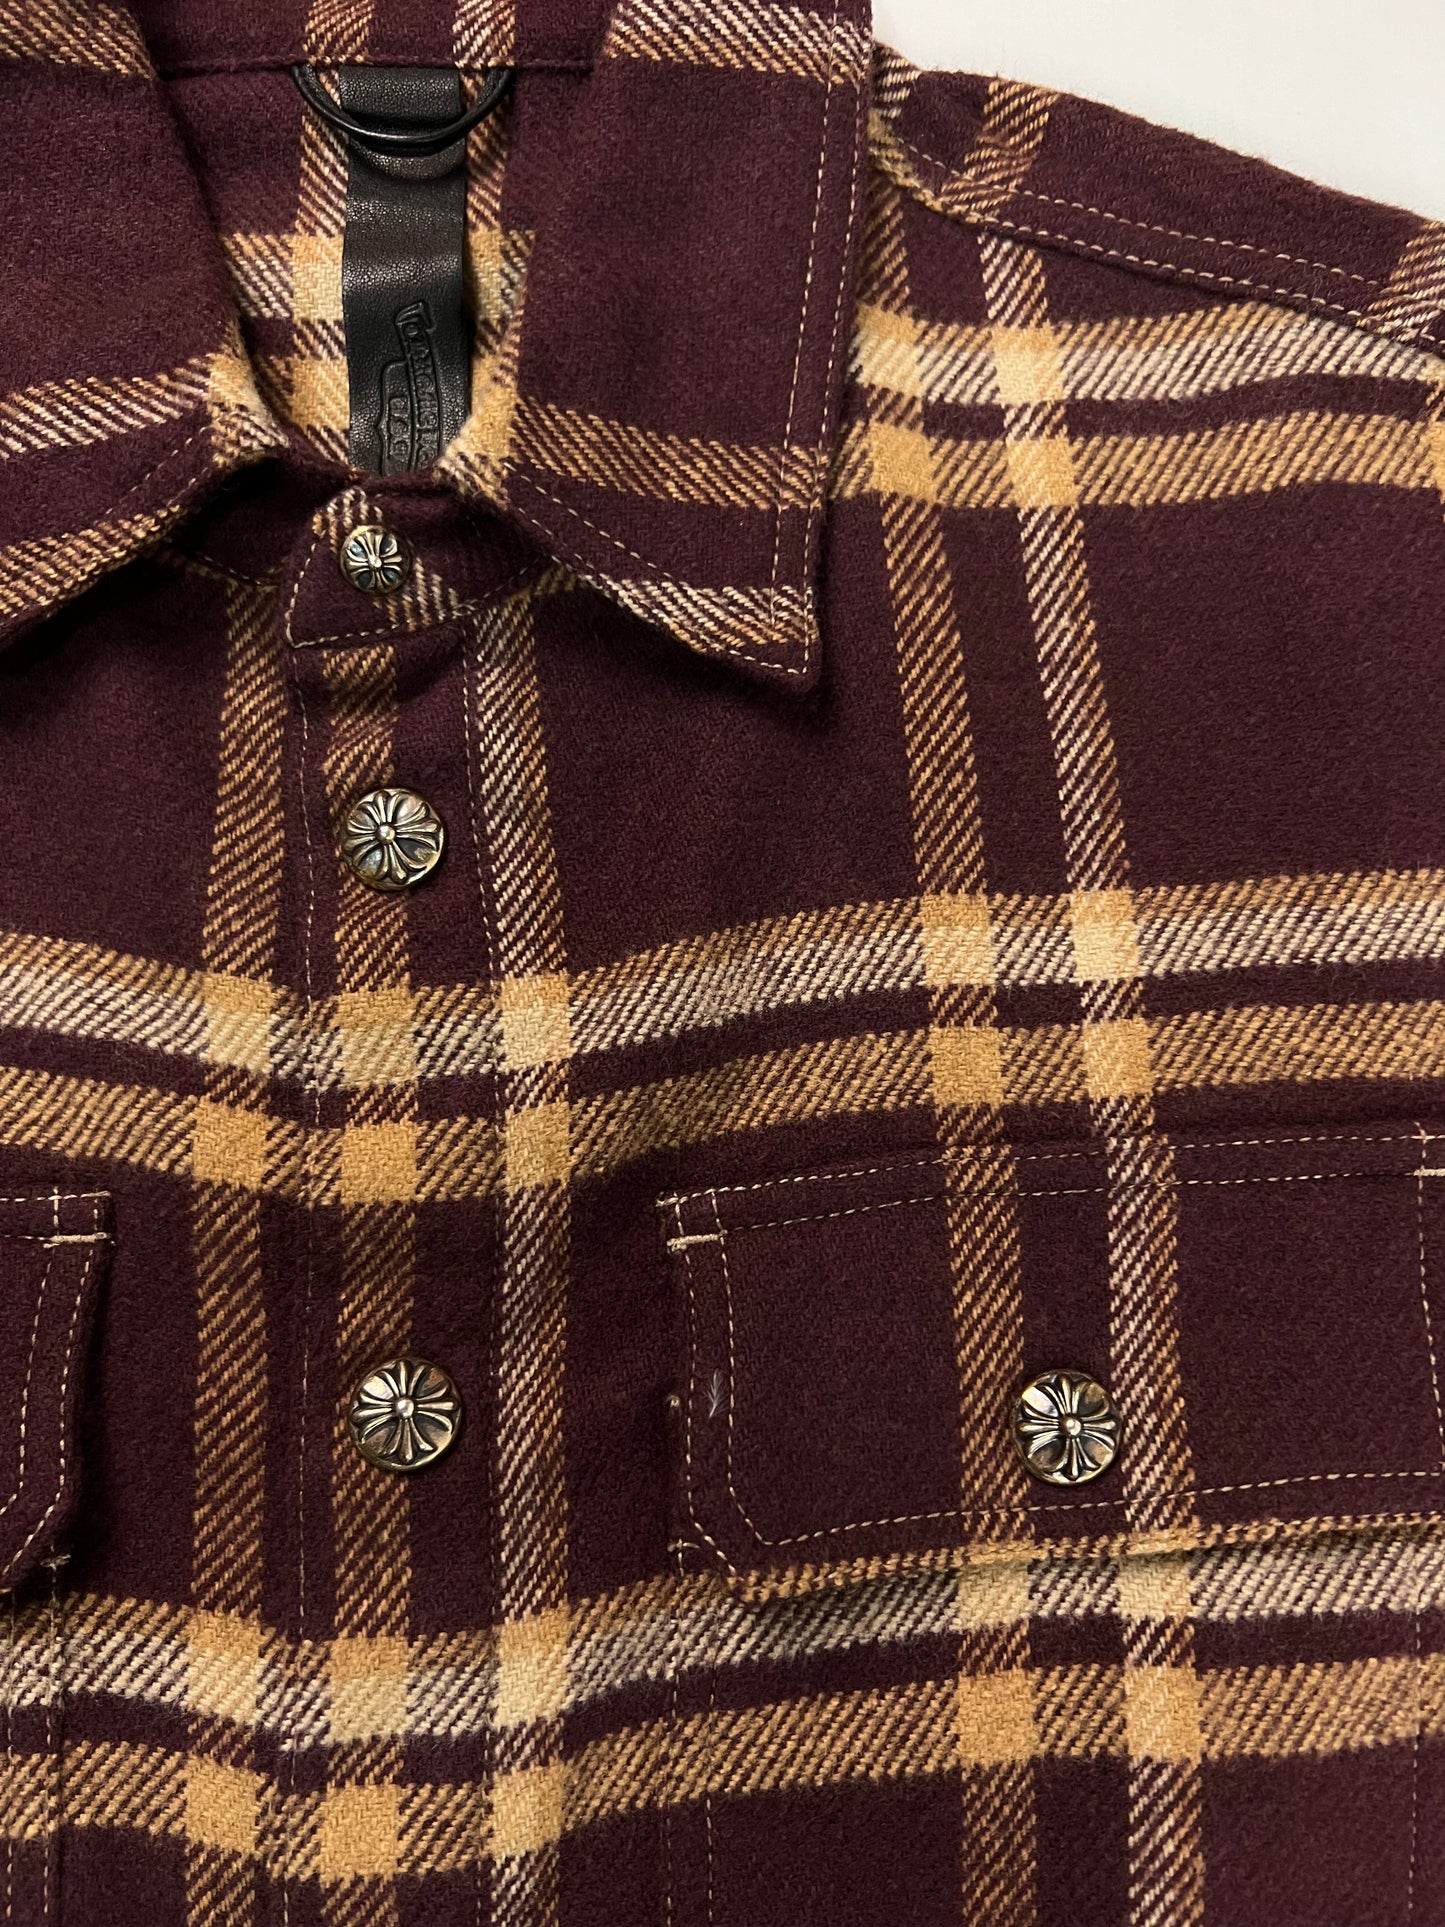 Chrome Hearts button up plaid Flannel shirt maroon SZ:M